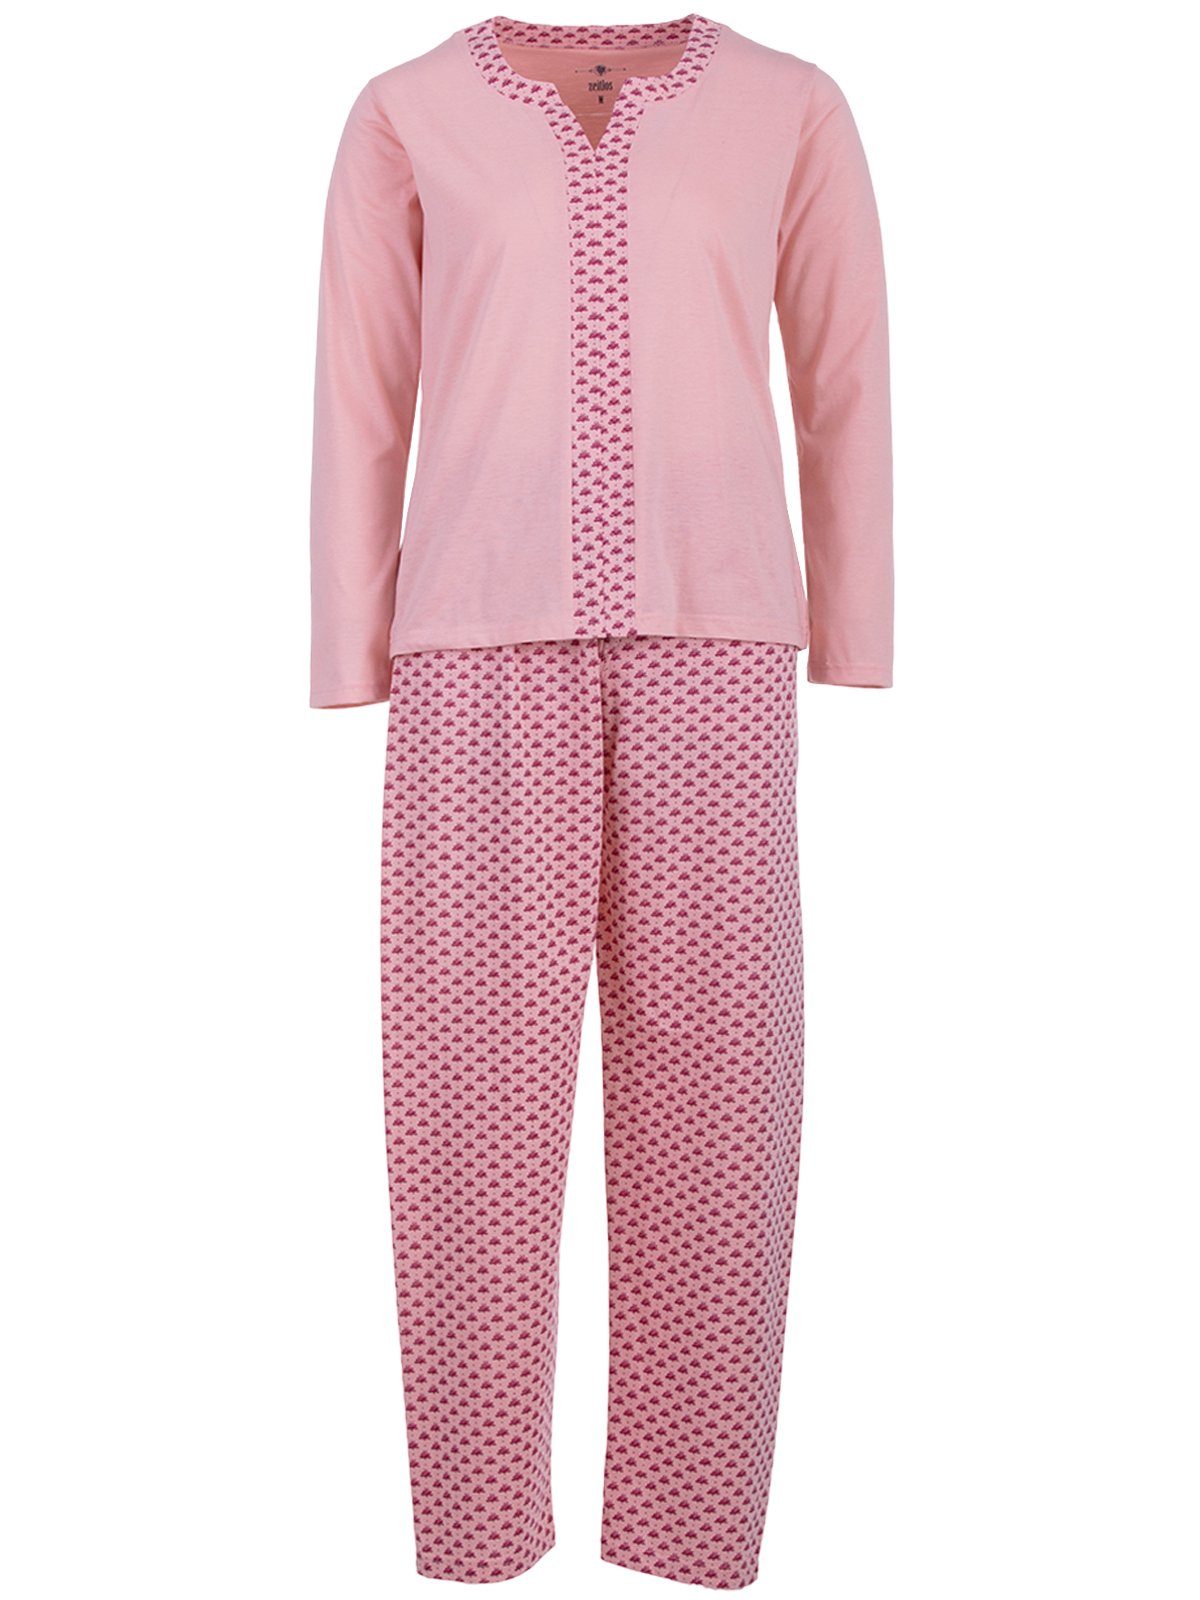 zeitlos Schlafanzug Pyjama Set Langarm - Borte Blumen rosa